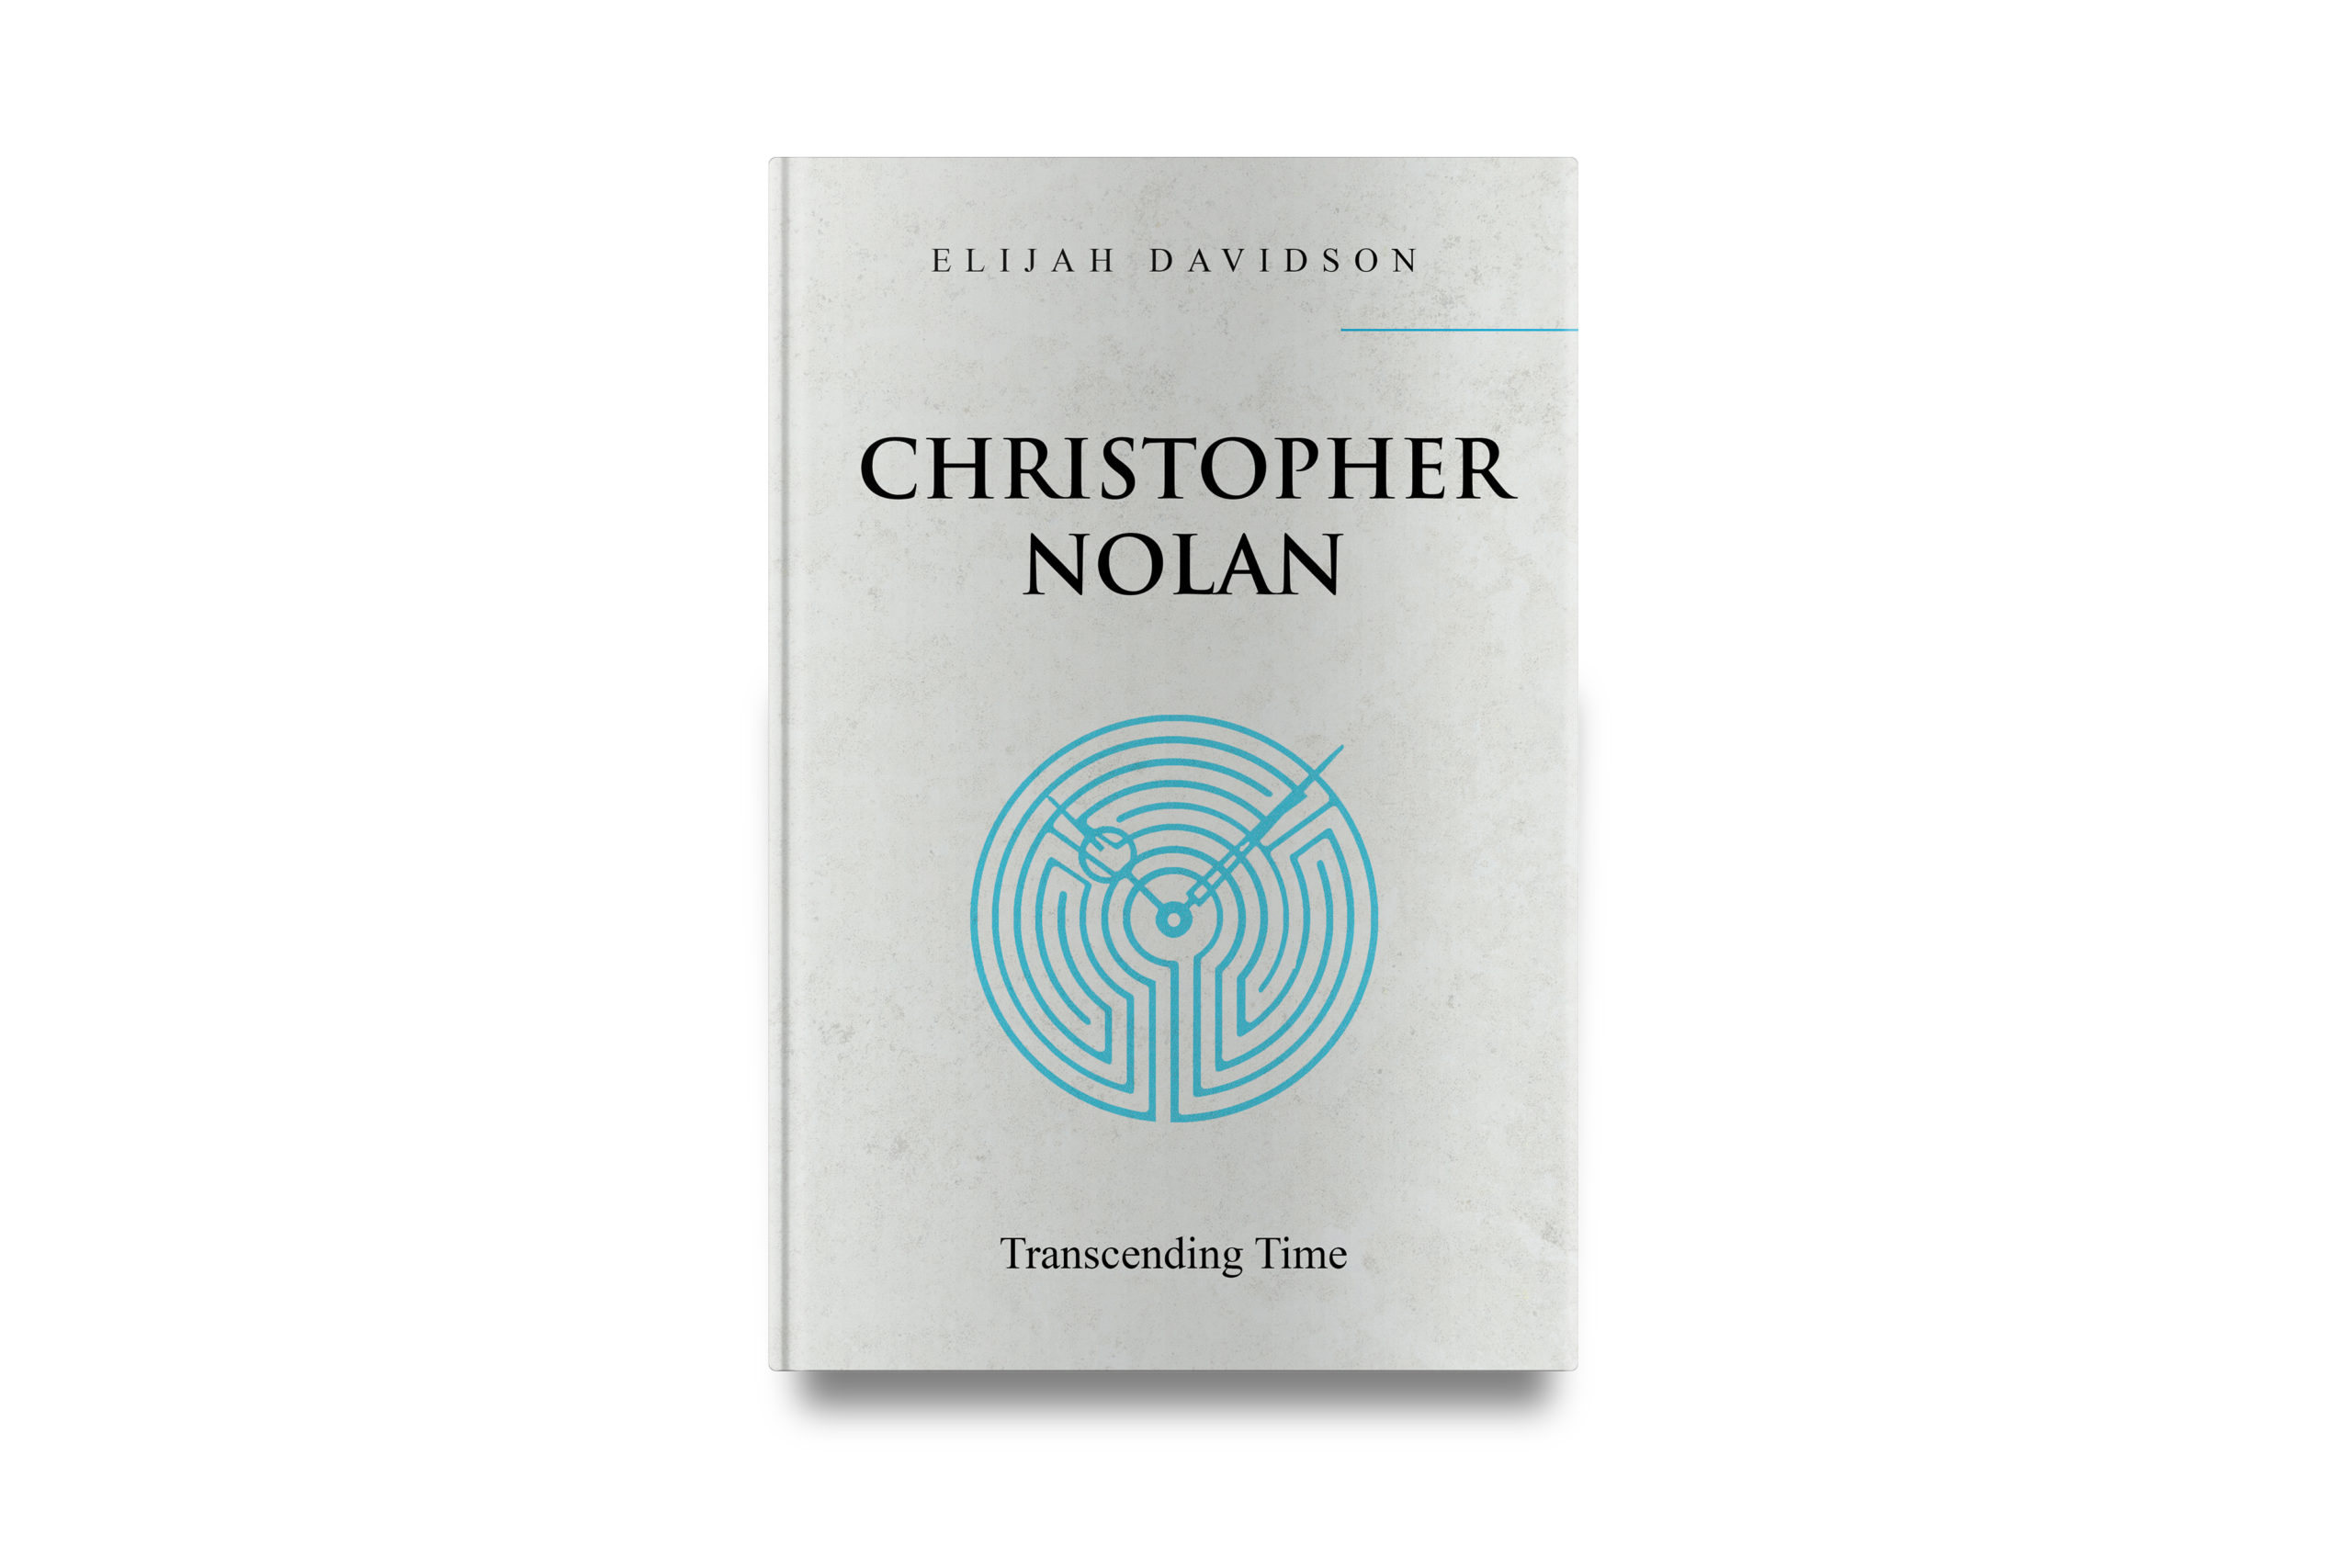 Christopher Nolan Transcending Time Cover